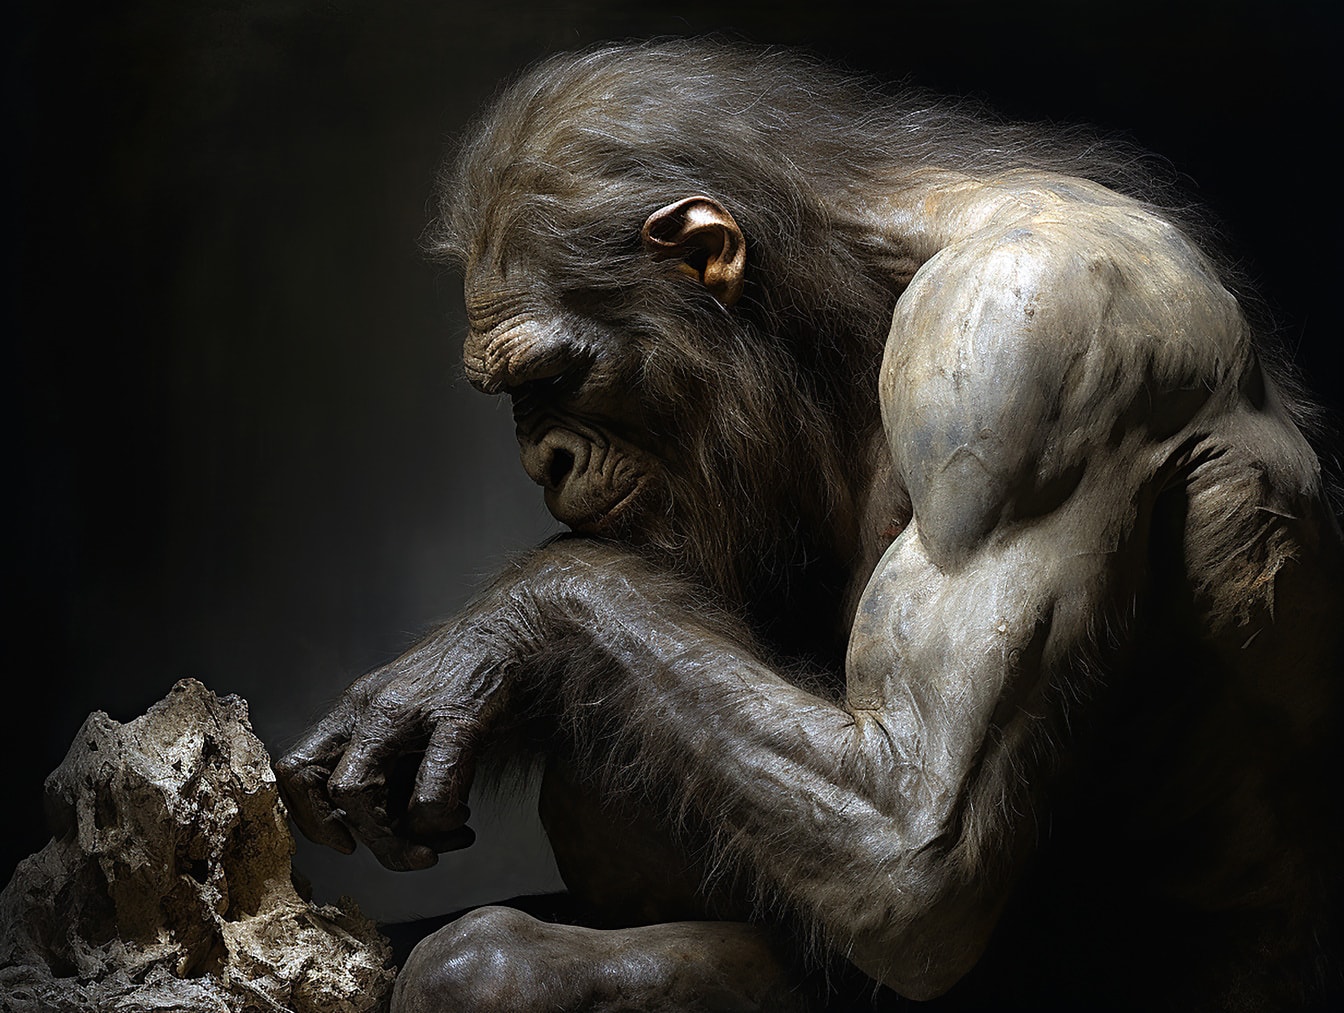 Retrato de vista lateral de primate musculoso con obra de arte digital de fondo oscuro